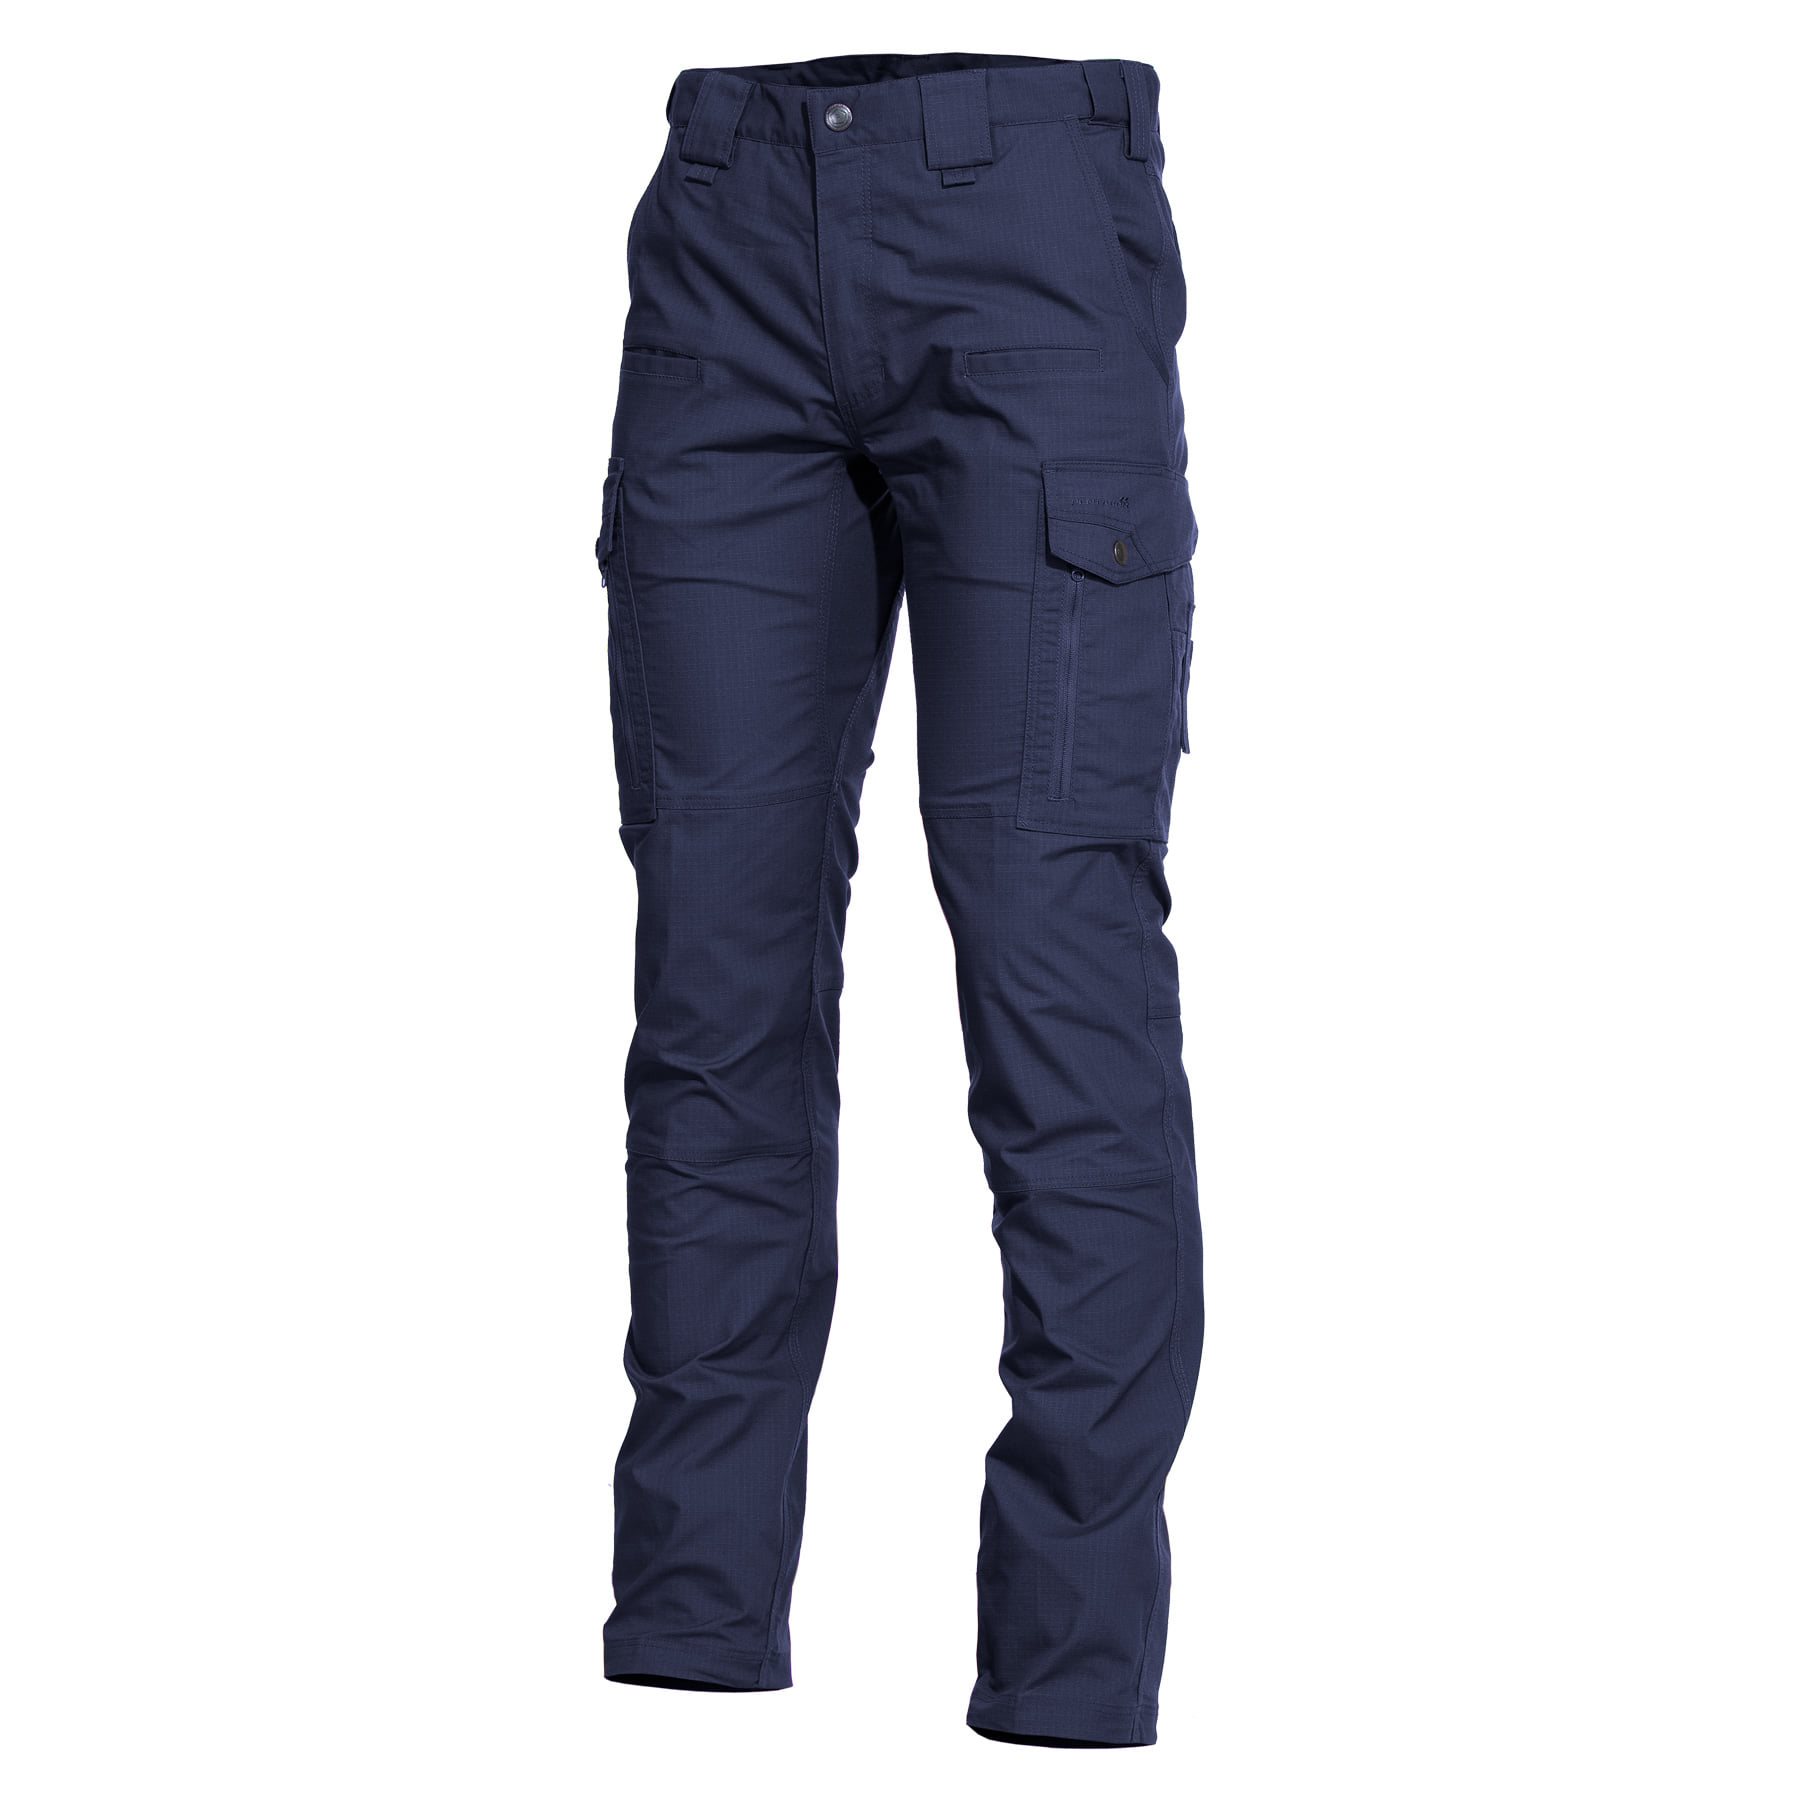 Pants RANGER 2.0 MIDNIGHT BLUE PENTAGON K05007-2.0-05MB L-11